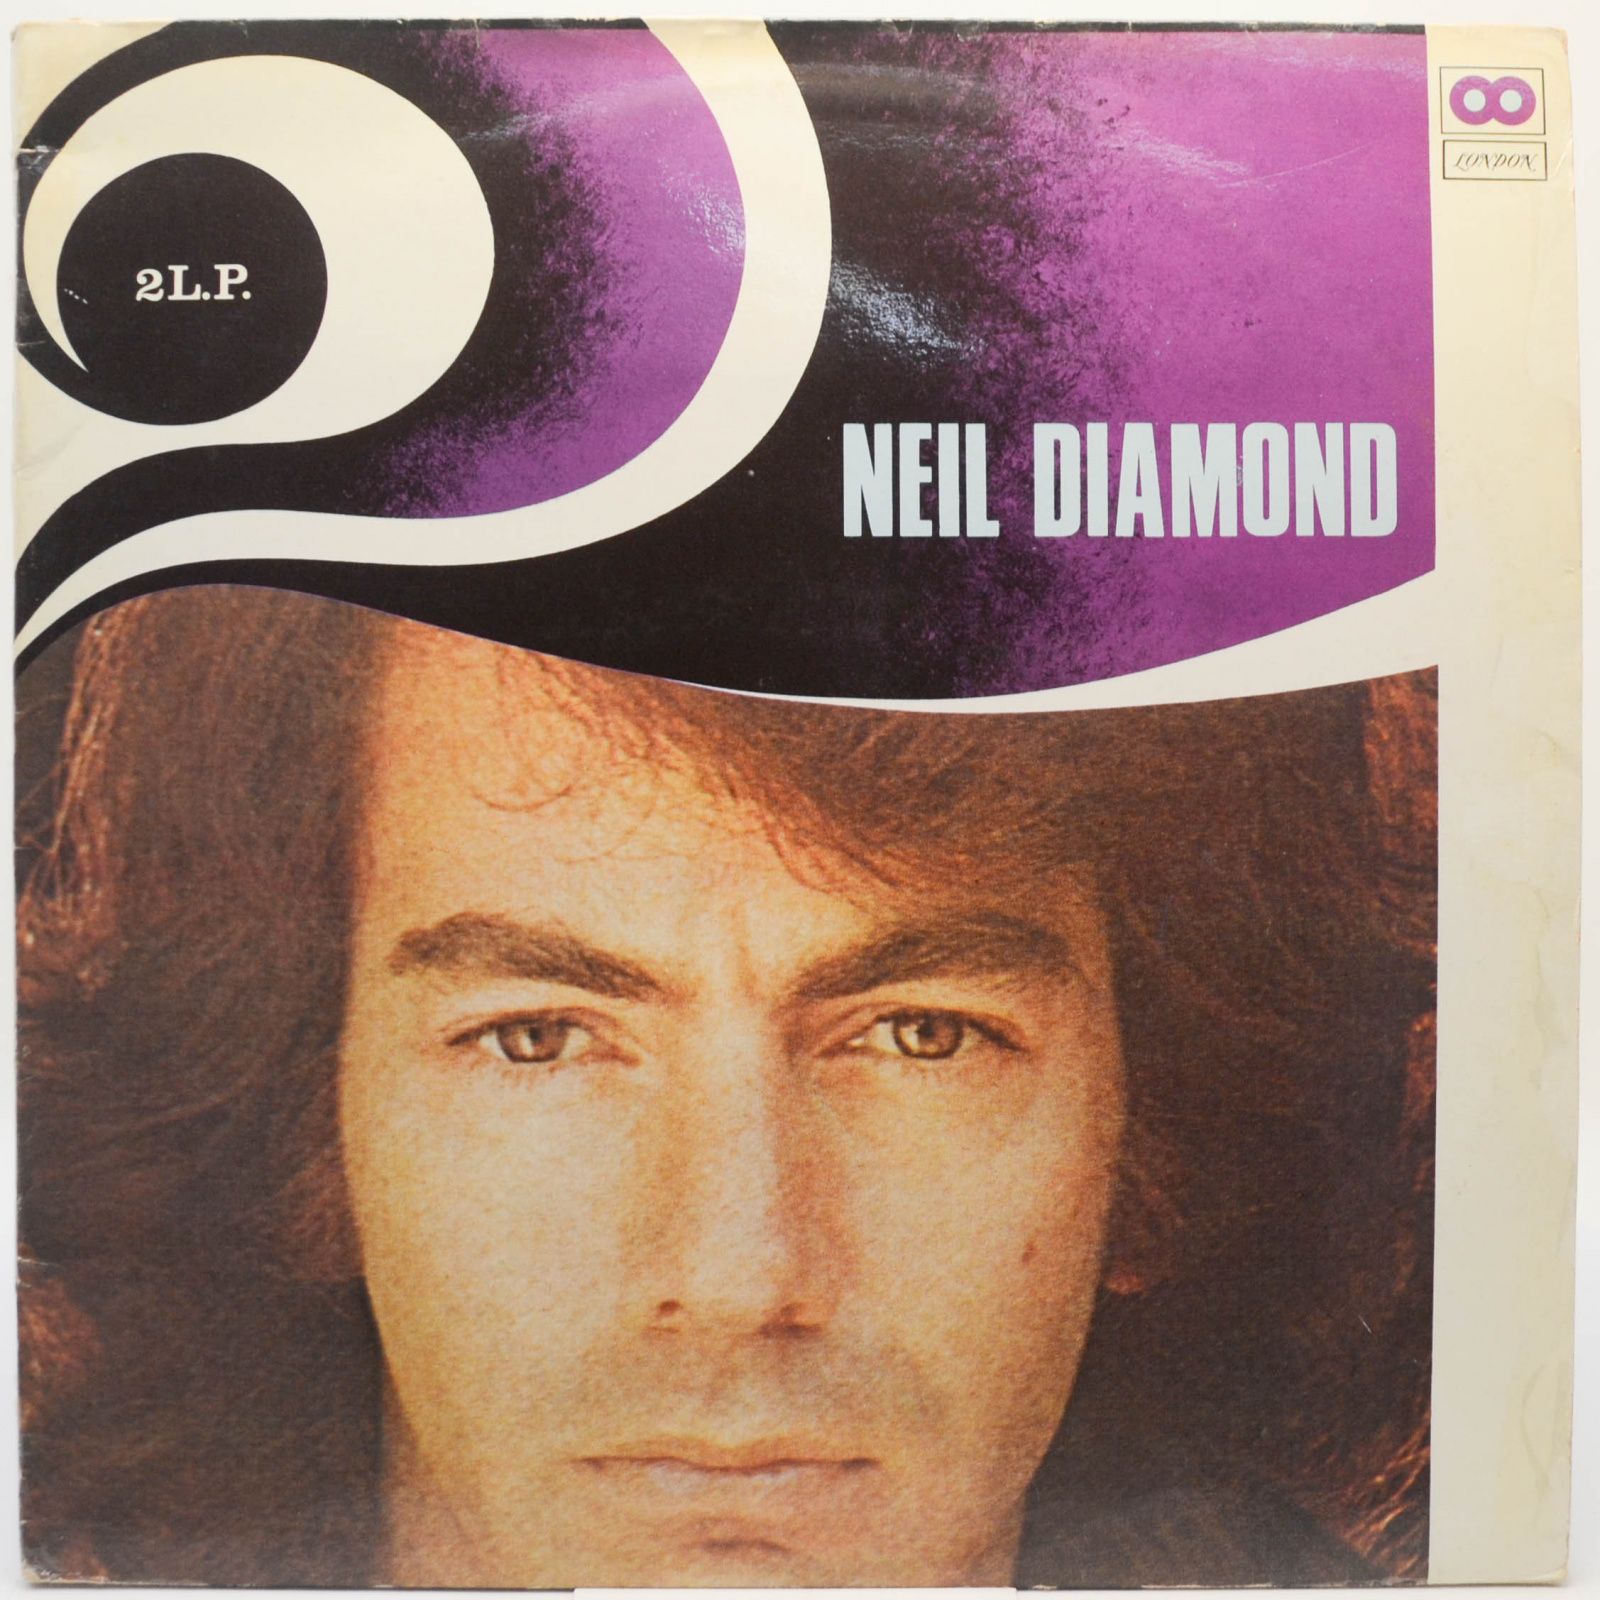 Neil Diamond (2LP), 1978